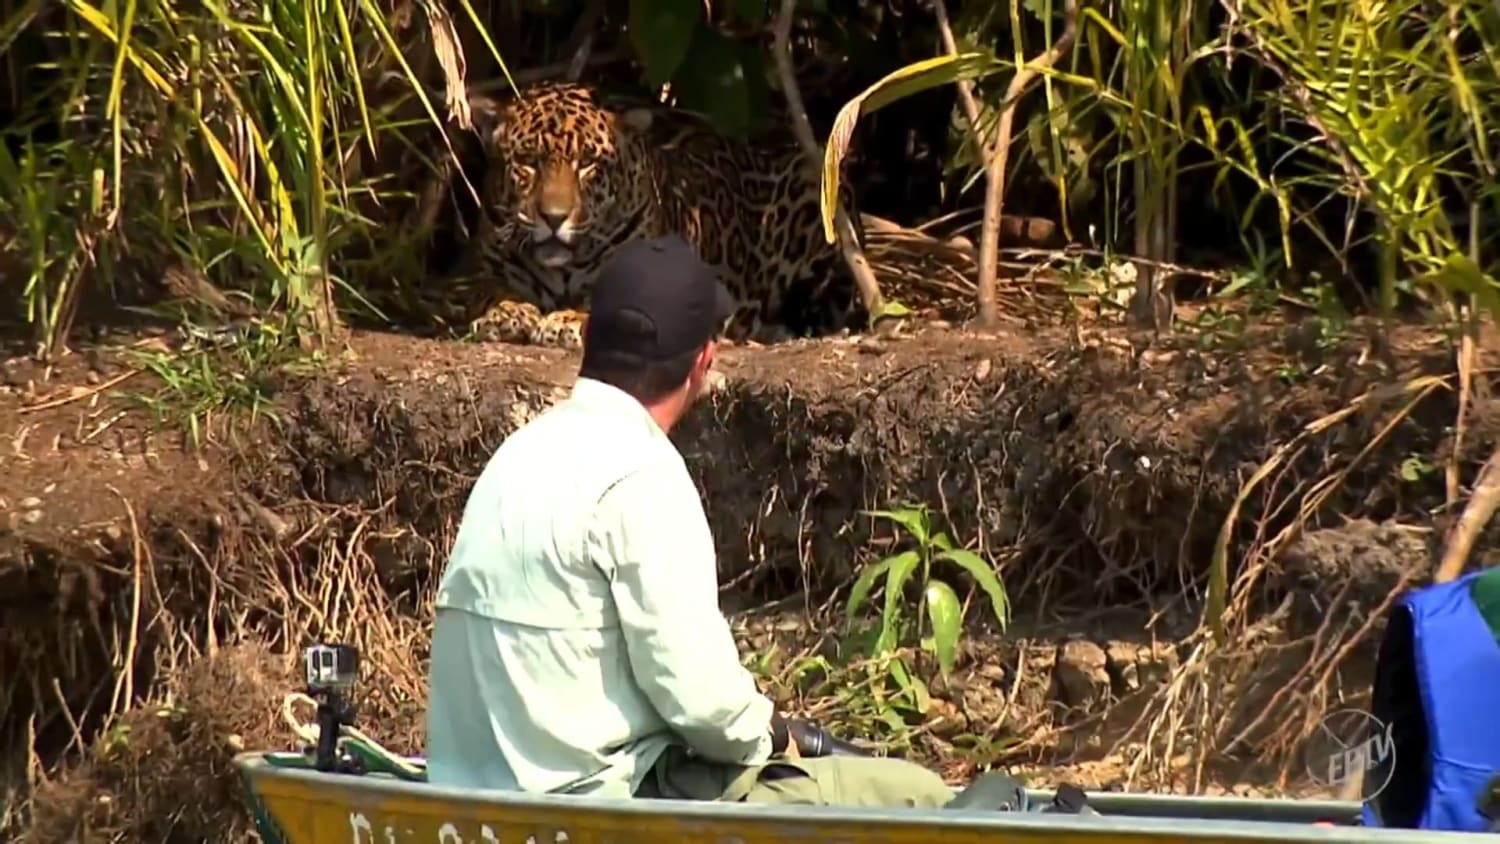 TV presenter has a close encounter with a jaguar in the Pantanal